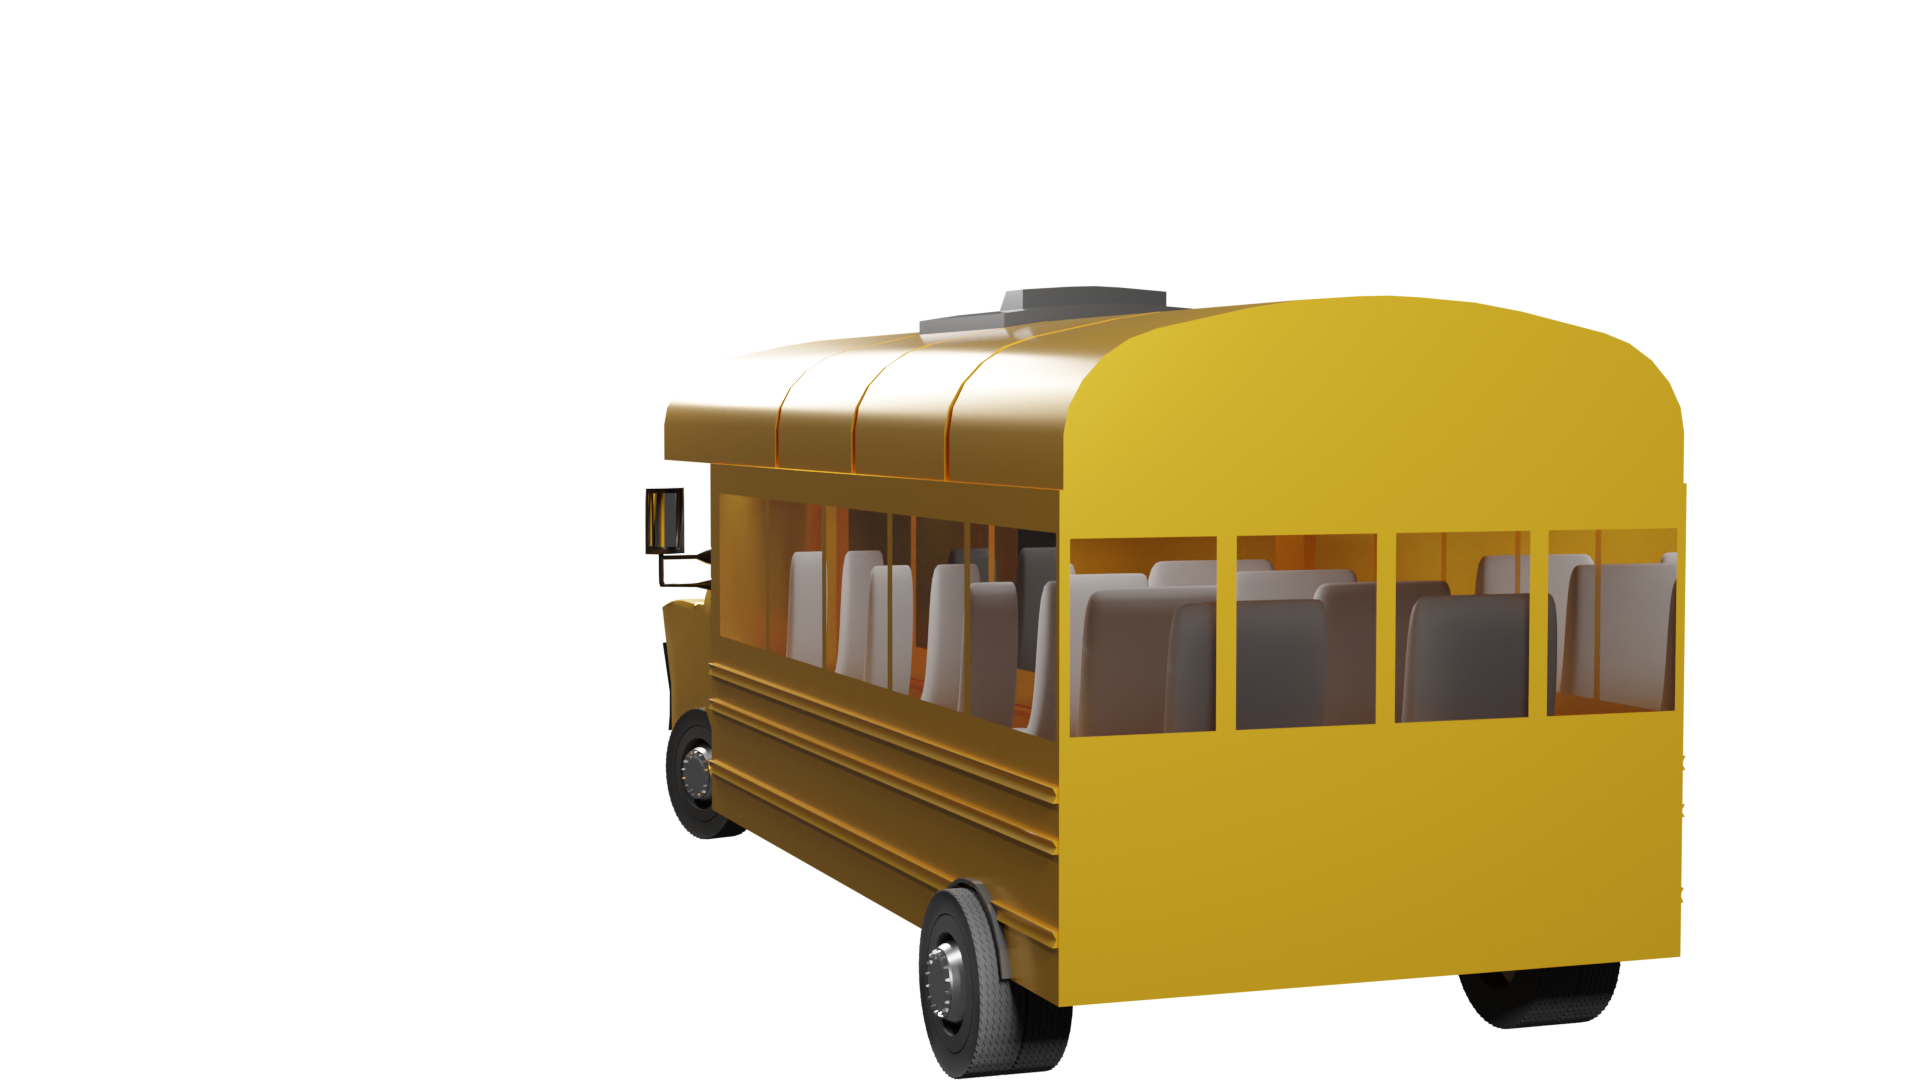 schoolbus preview image 3